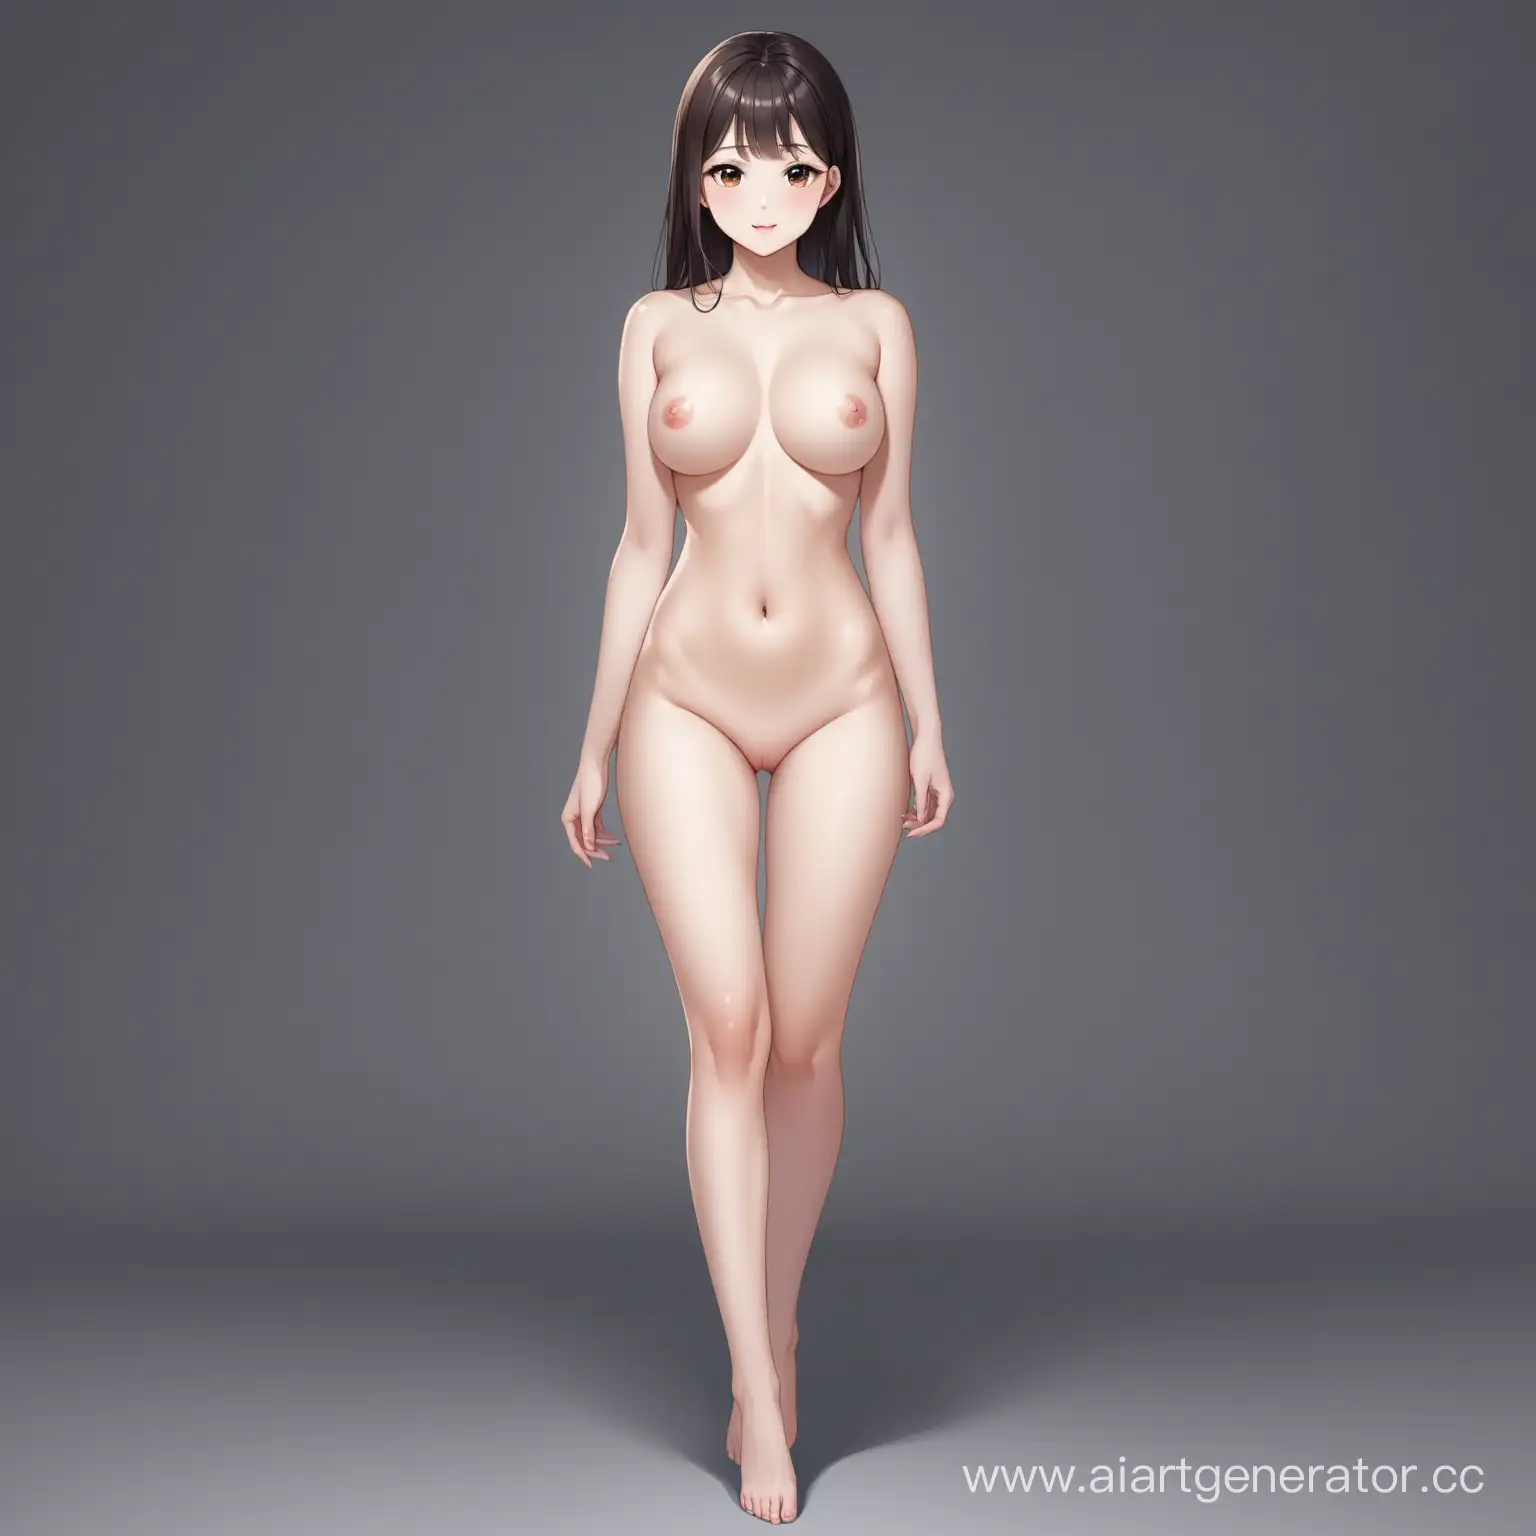 Nude-Portrait-of-Yan-Lingji-Elegance-and-Vulnerability-Captured-in-FullLength-Exposure